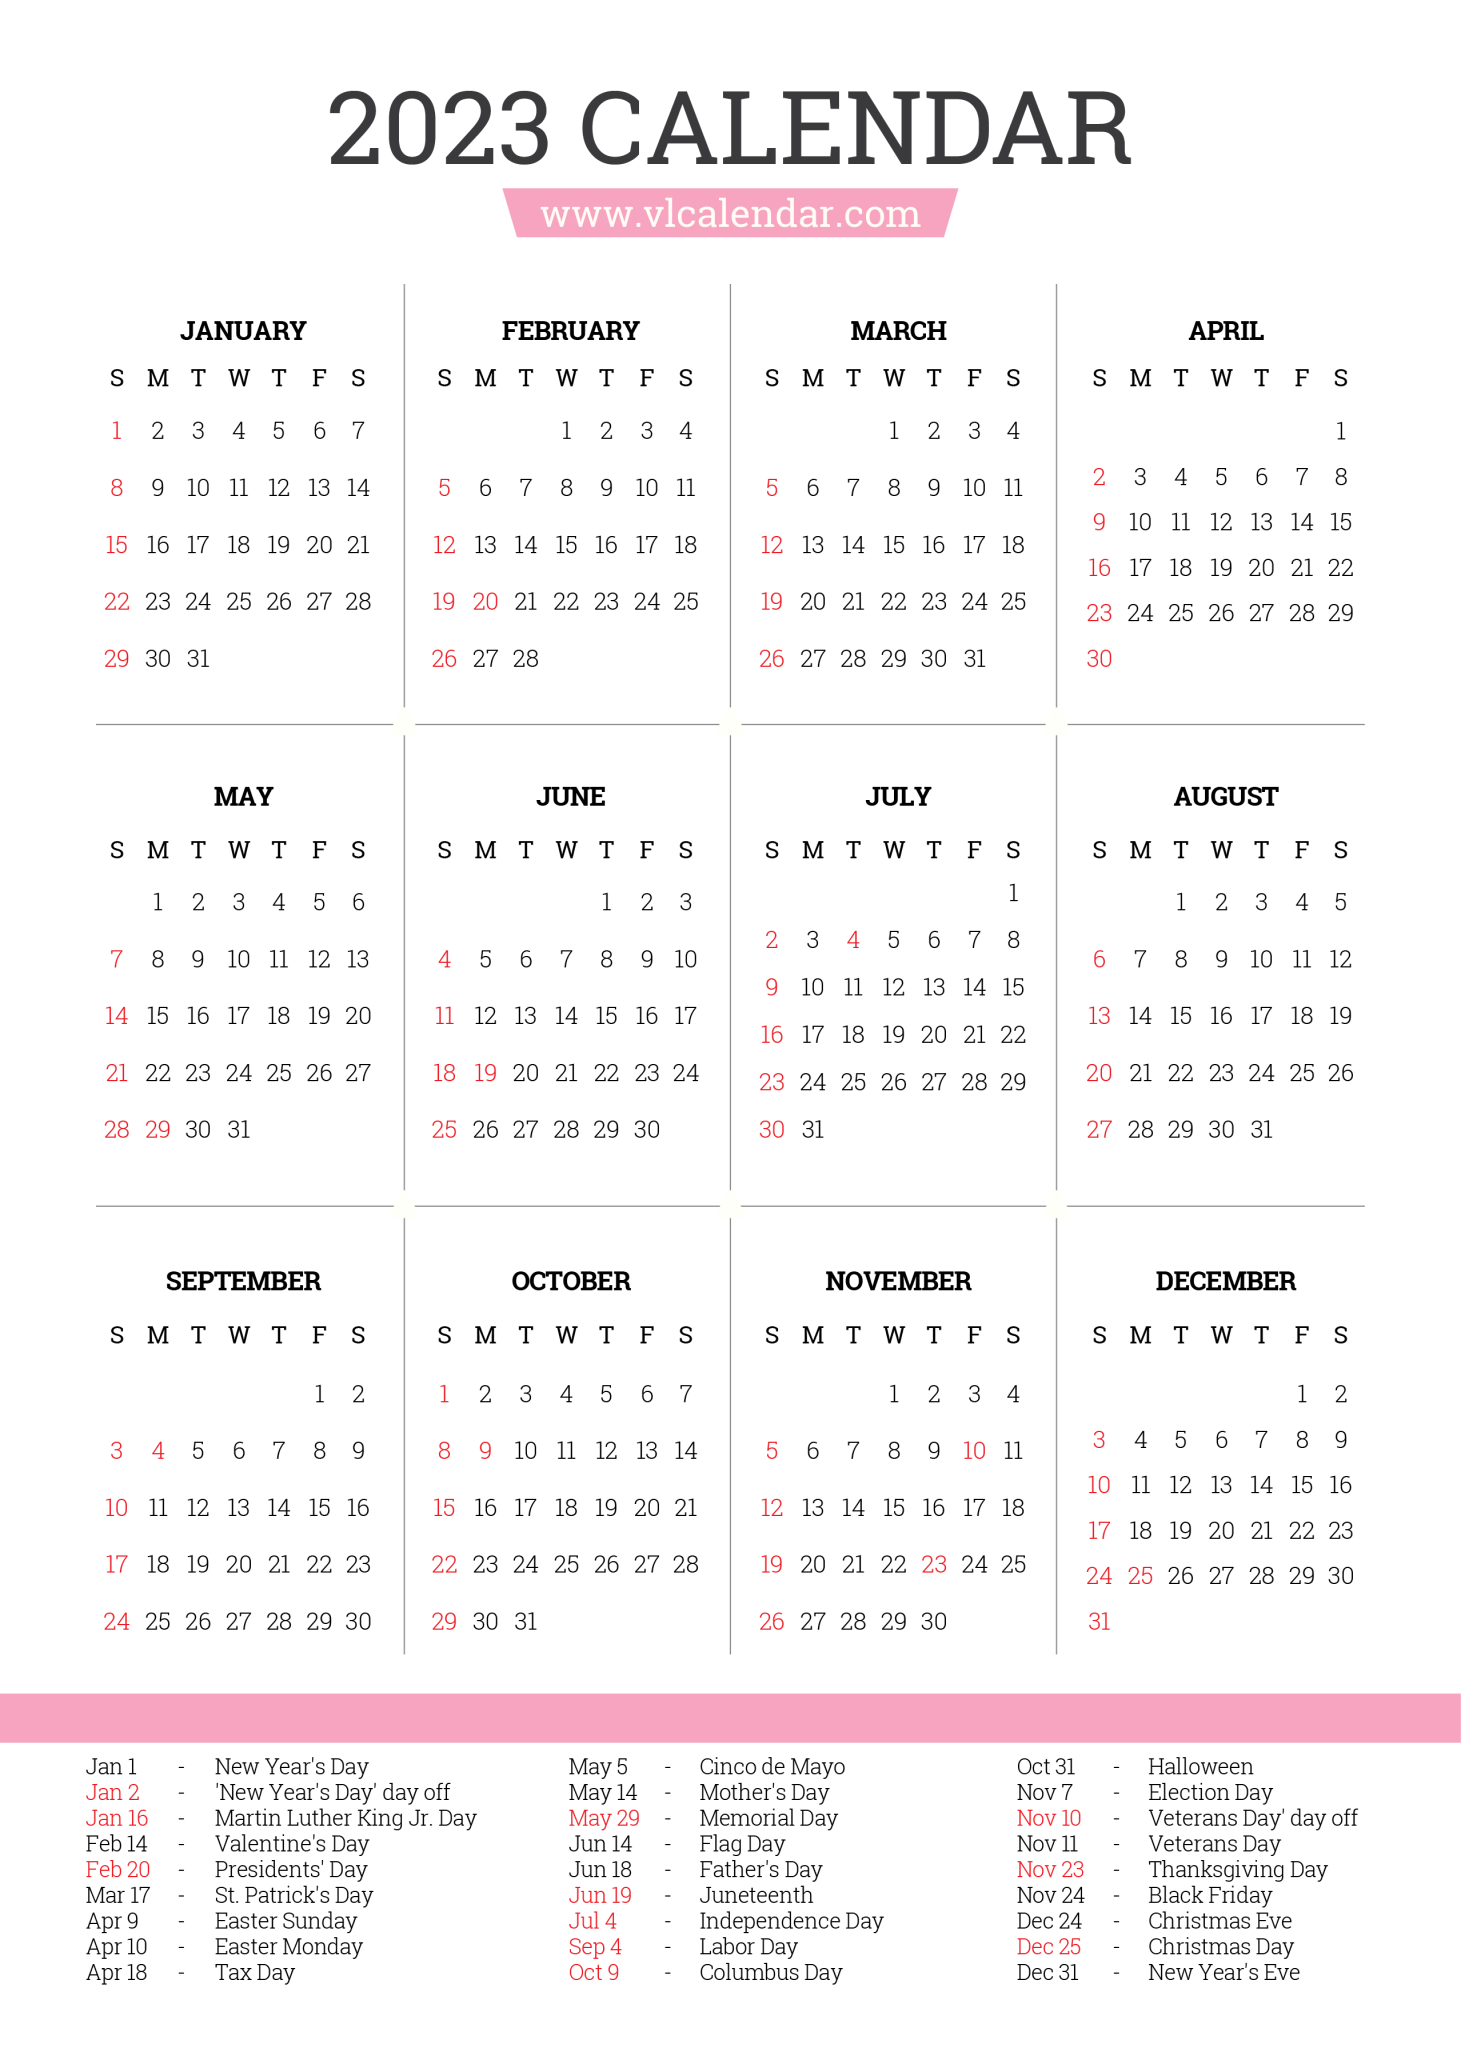 year-2023-calendar-printable-templates-with-holidays-vl-calendar